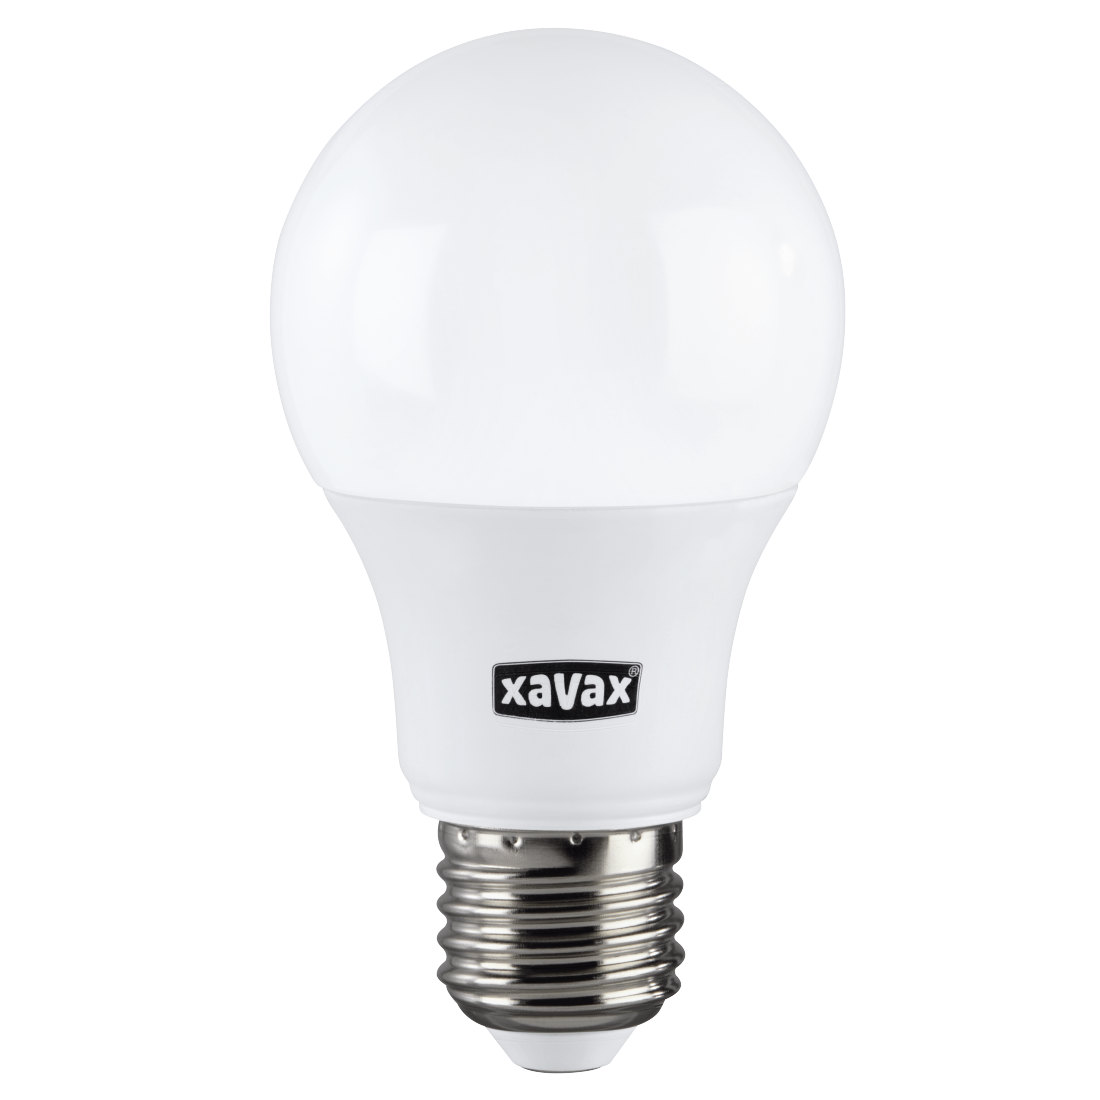 abx Druckfähige Abbildung - Xavax, LED-Lampe, E27, 470lm ersetzt 40W, Glühlampe, Warmweiß, dimmbar